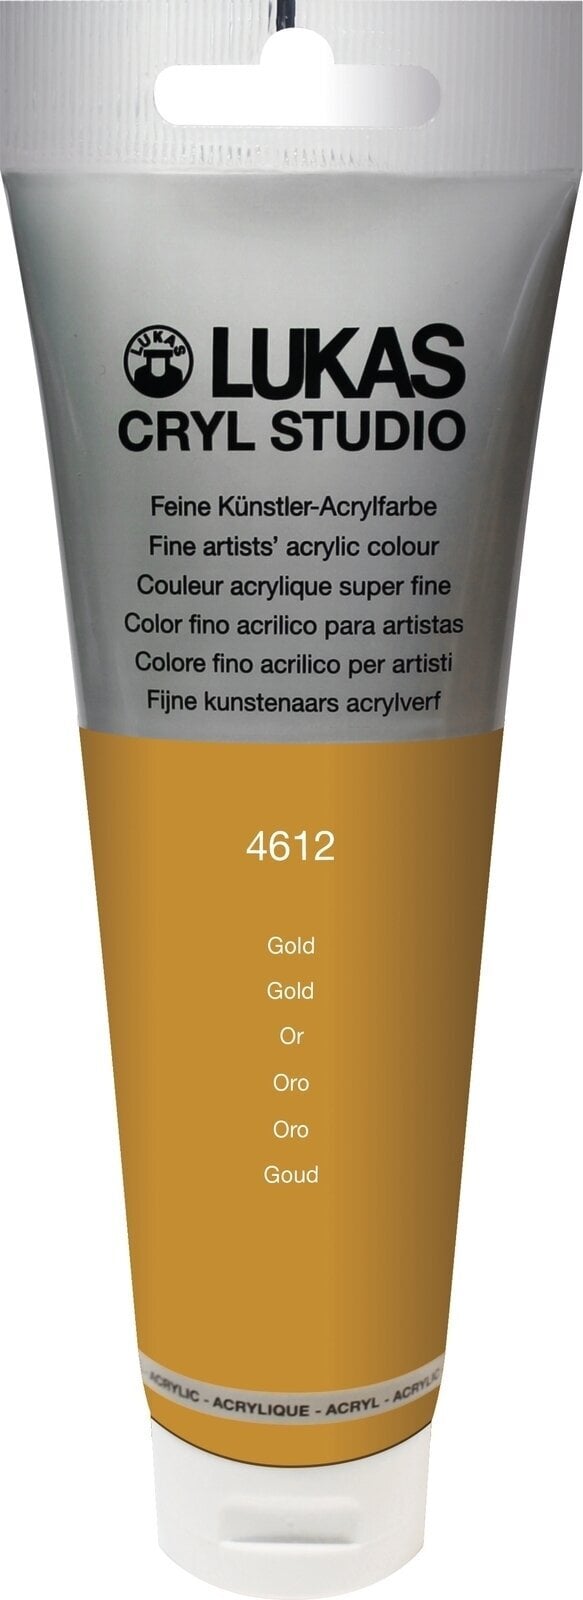 Aκρυλικό Χρώμα Lukas Cryl Studio Ακρυλική μπογιά 125 ml Χρυσό